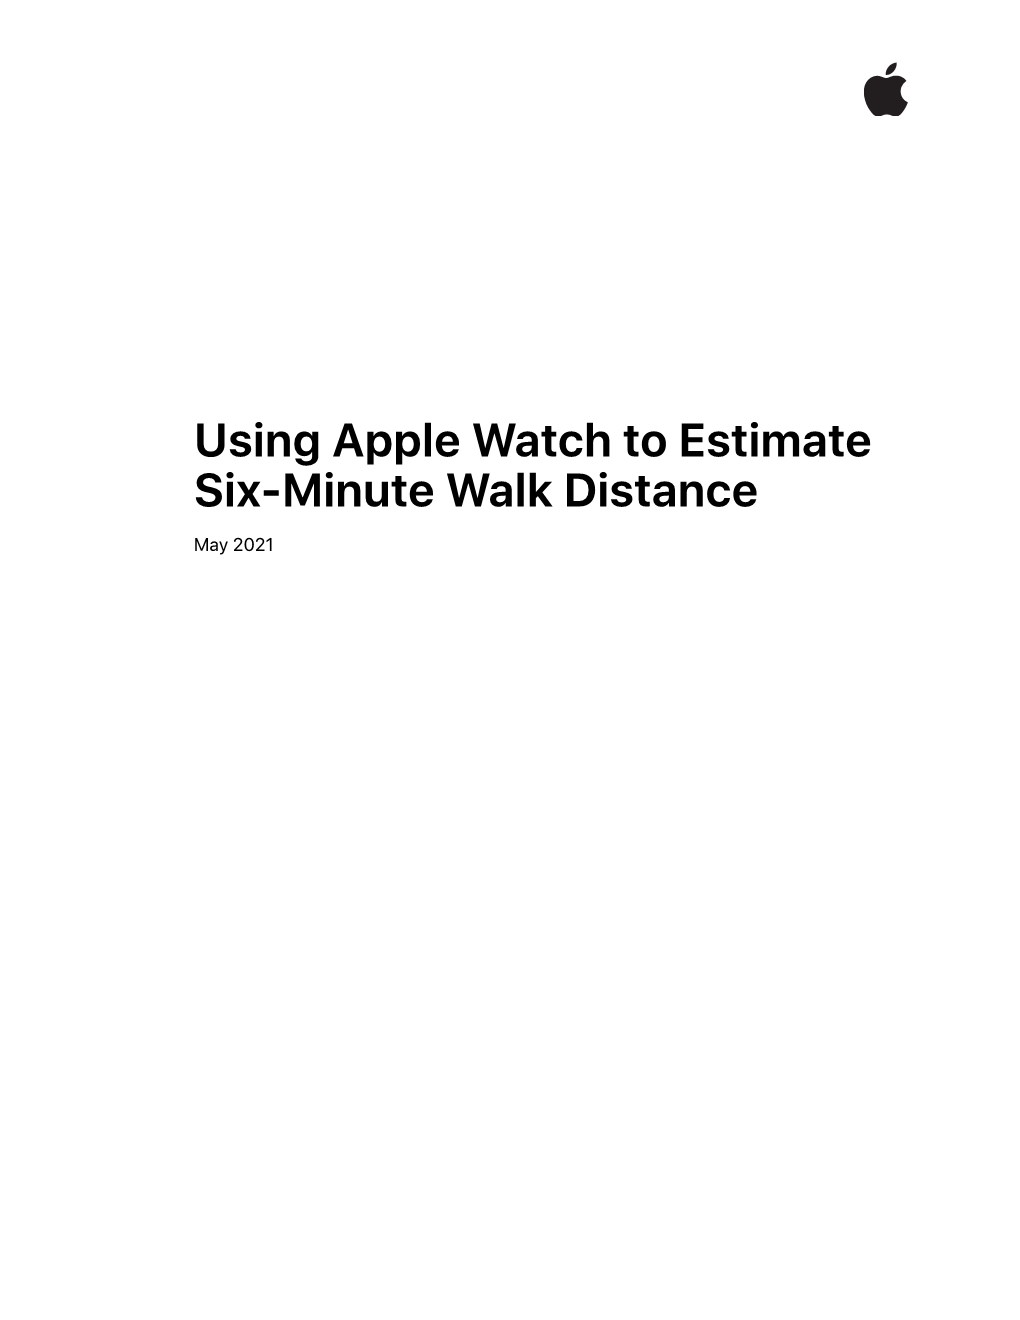 Using Apple Watch to Estimate Six-Minute Walk Distance (PDF)